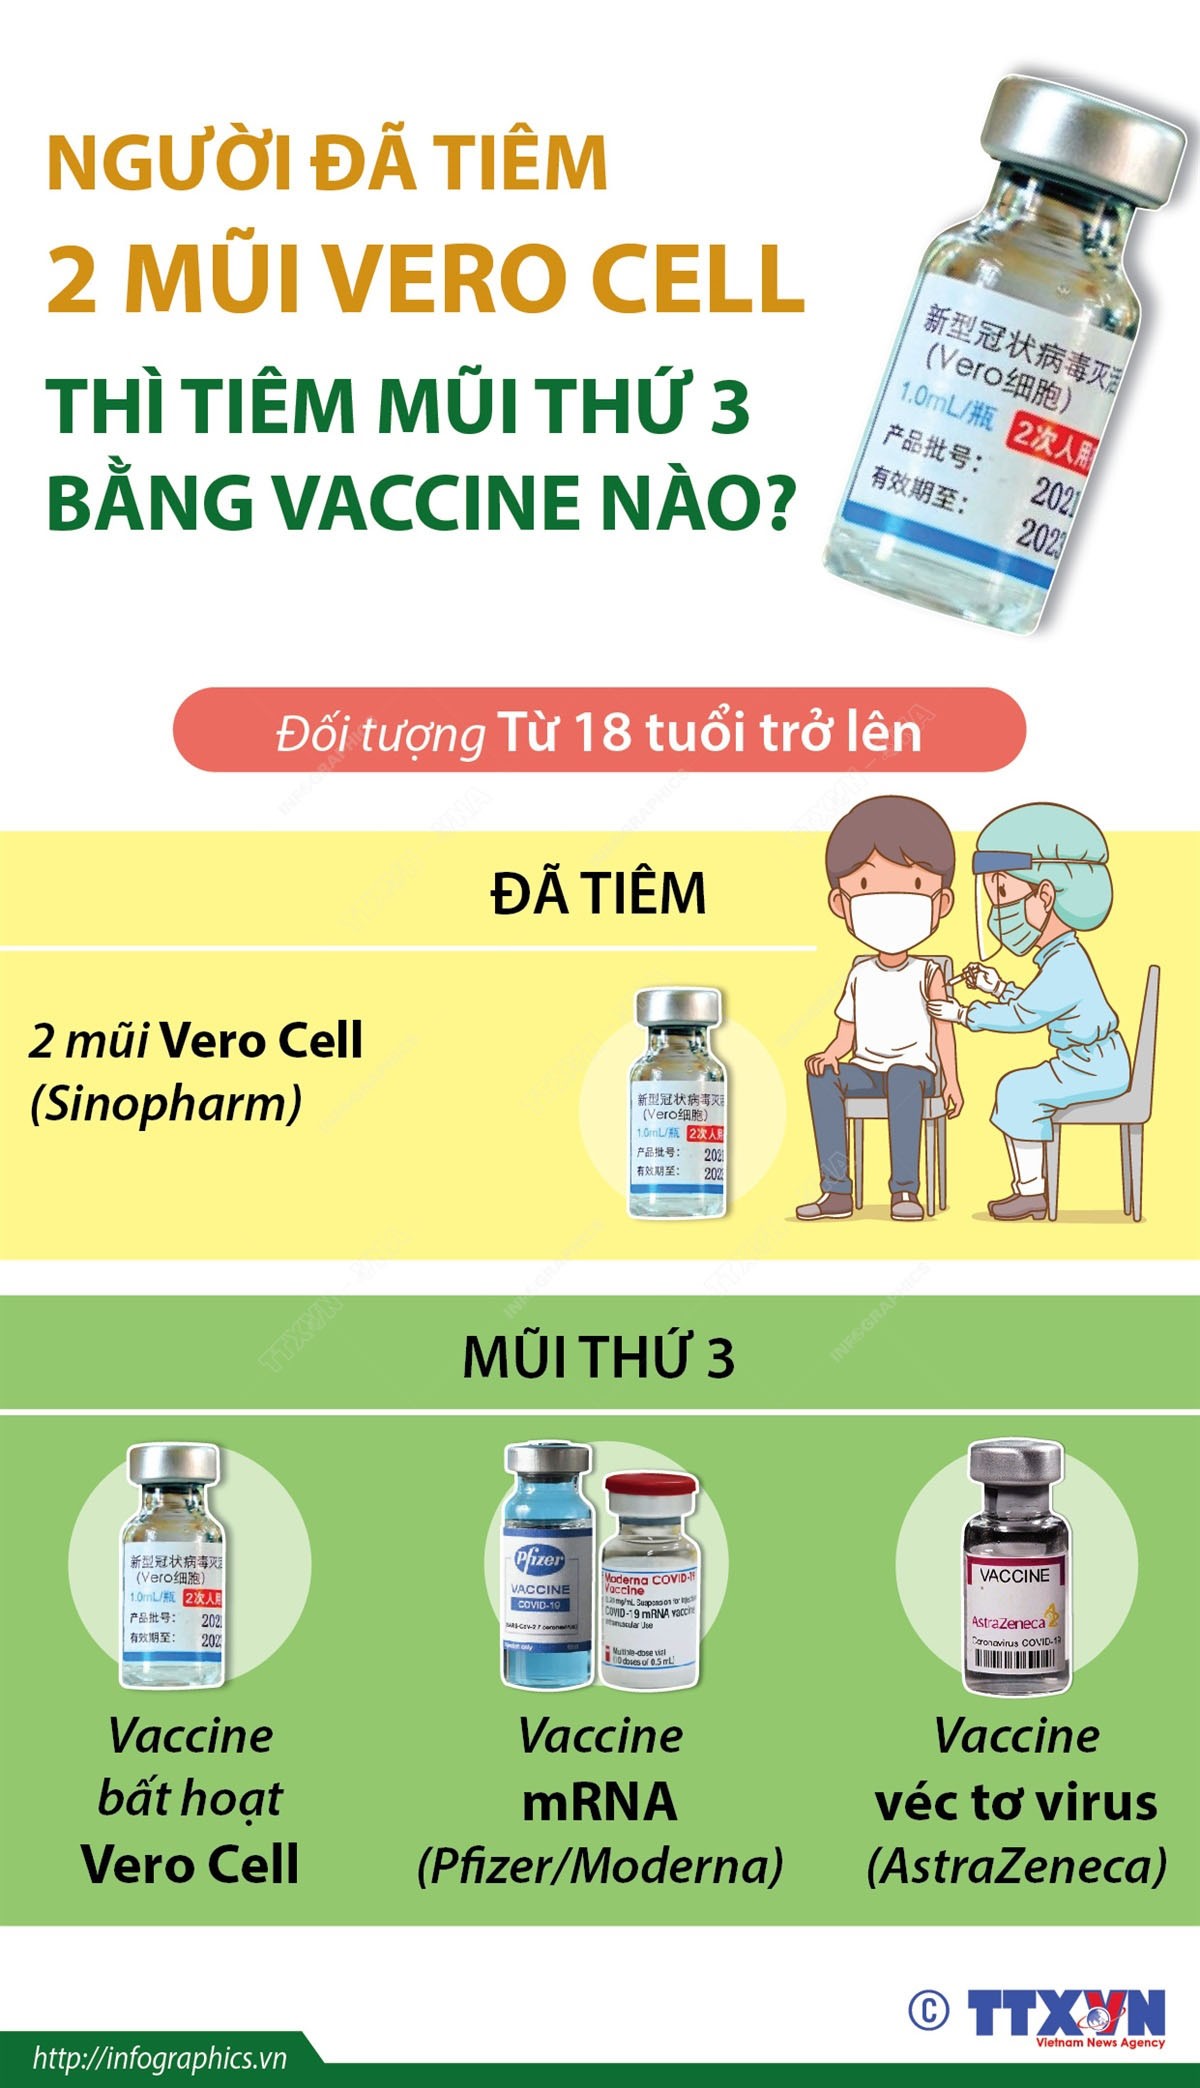 nguoi-da-tiem-2-mui-vero-cell-thi-tiem-mui-thu-3-bang-vaccine-nao-1641779221.jpg